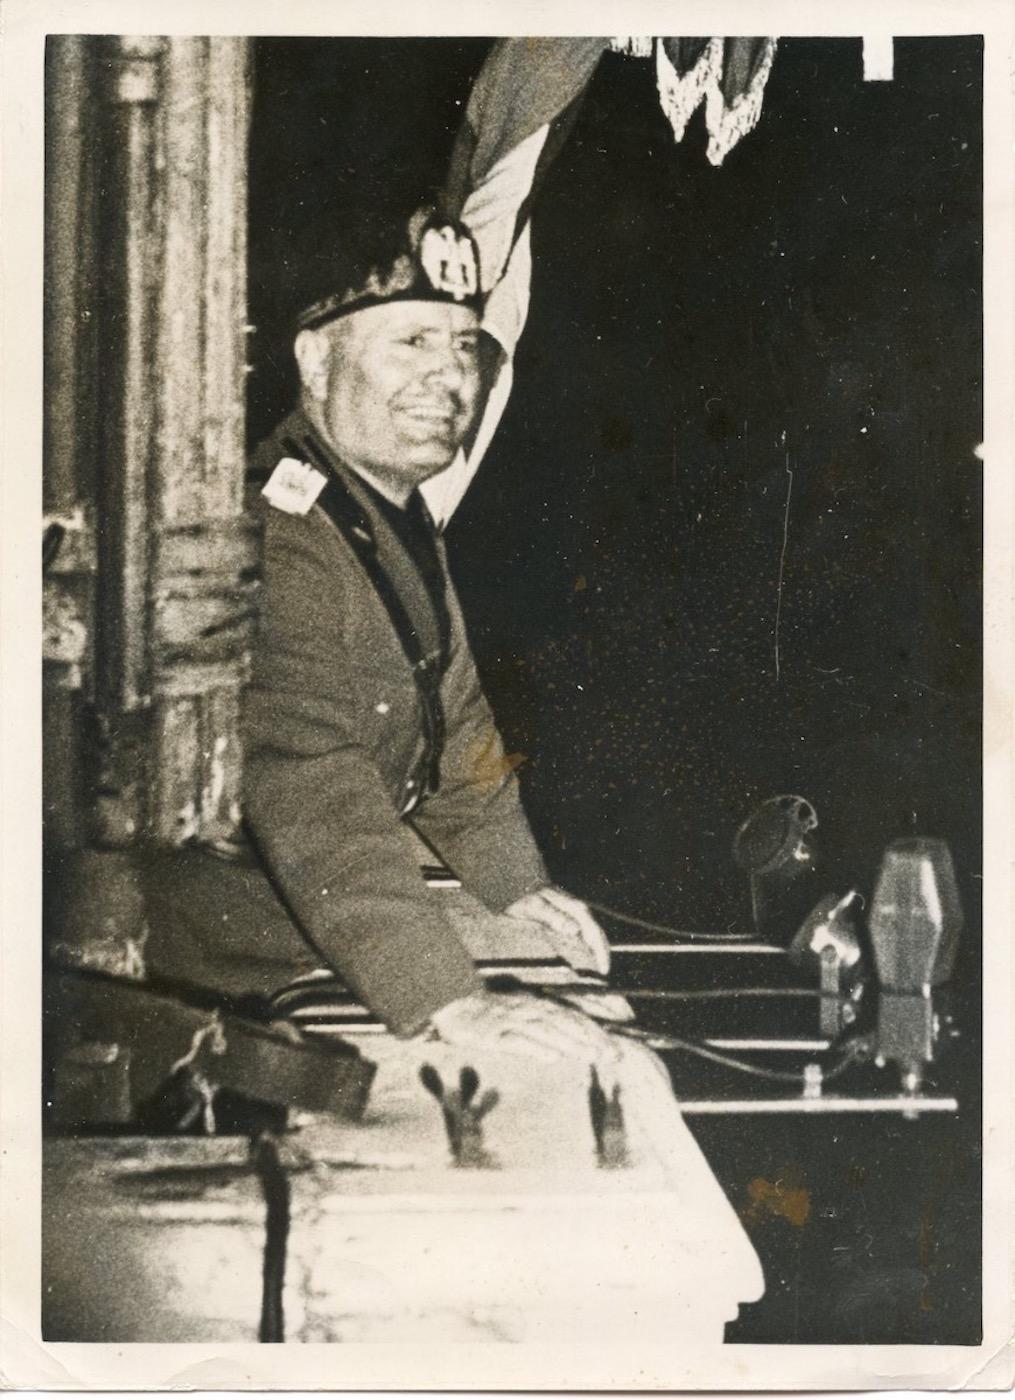 Unknown Portrait Photograph - Mussolini at the Balcony in Piazza Venezia (Rome) - Vintage Photo - 1937